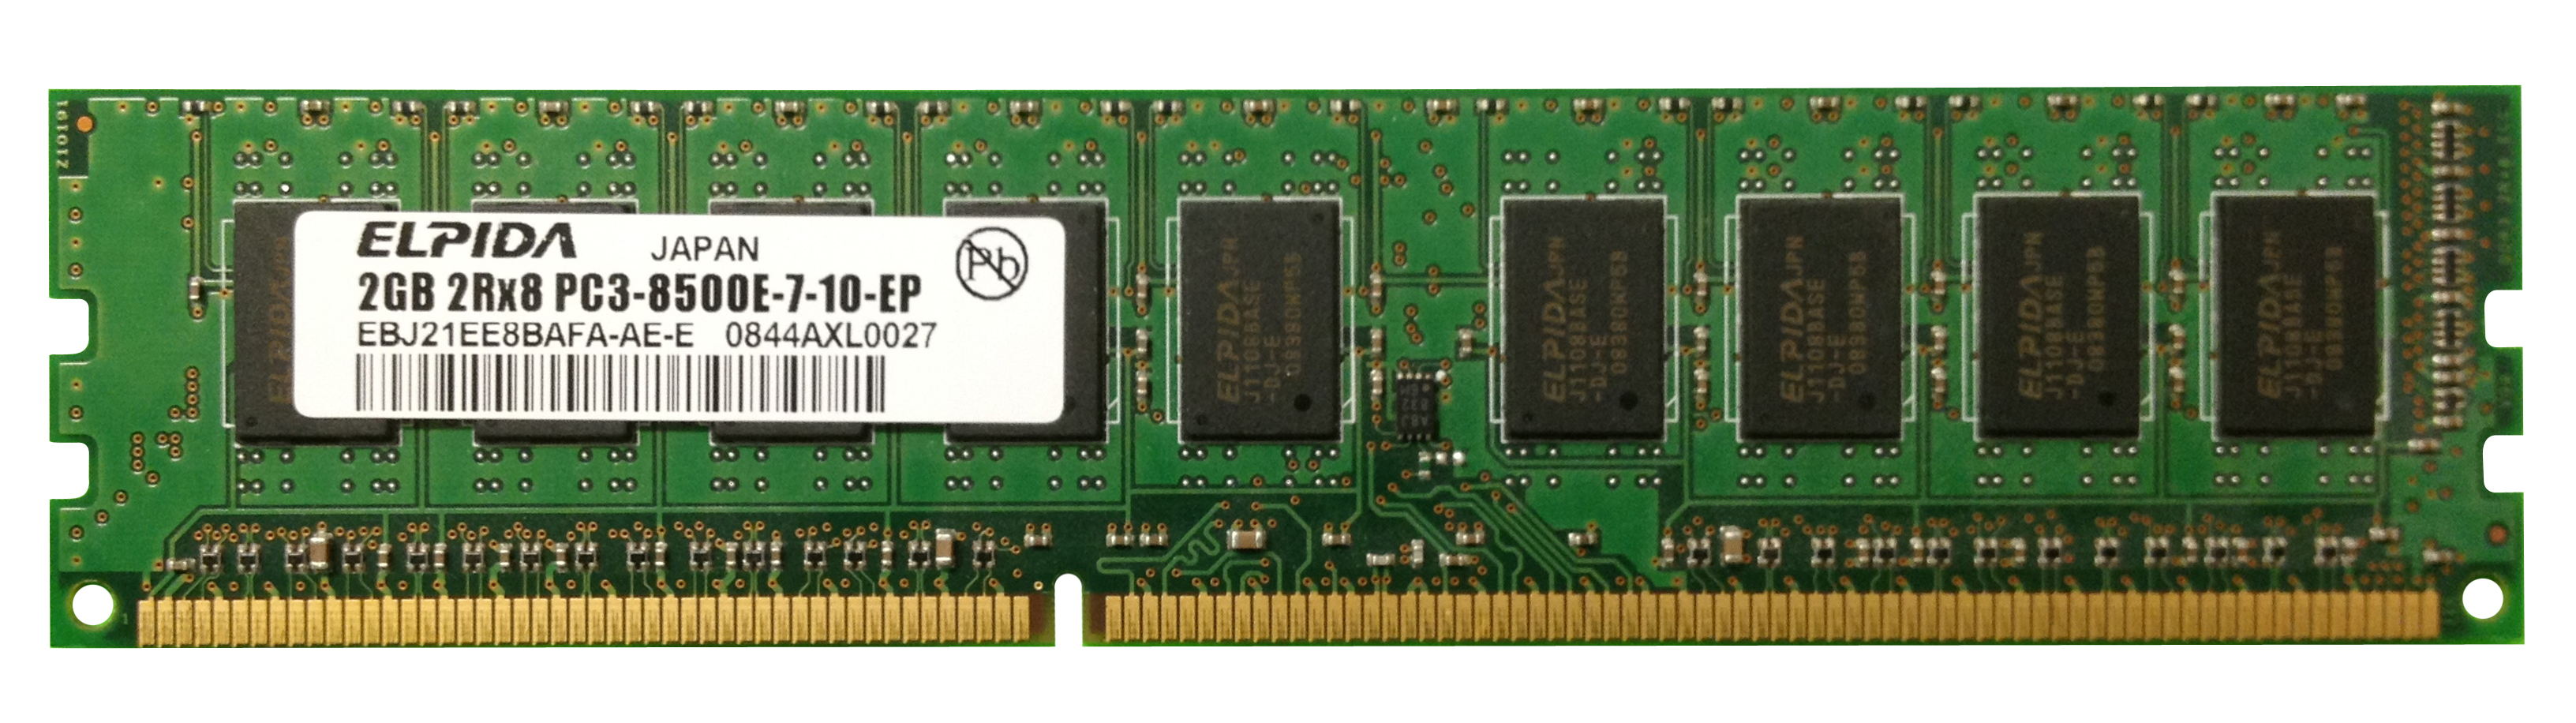 EBJ21EE8BAFA-AE-E Elpida 2GB PC3-8500 DDR3-1066MHz ECC Unbuffered CL7 240-Pin DIMM Dual Rank Memory Module